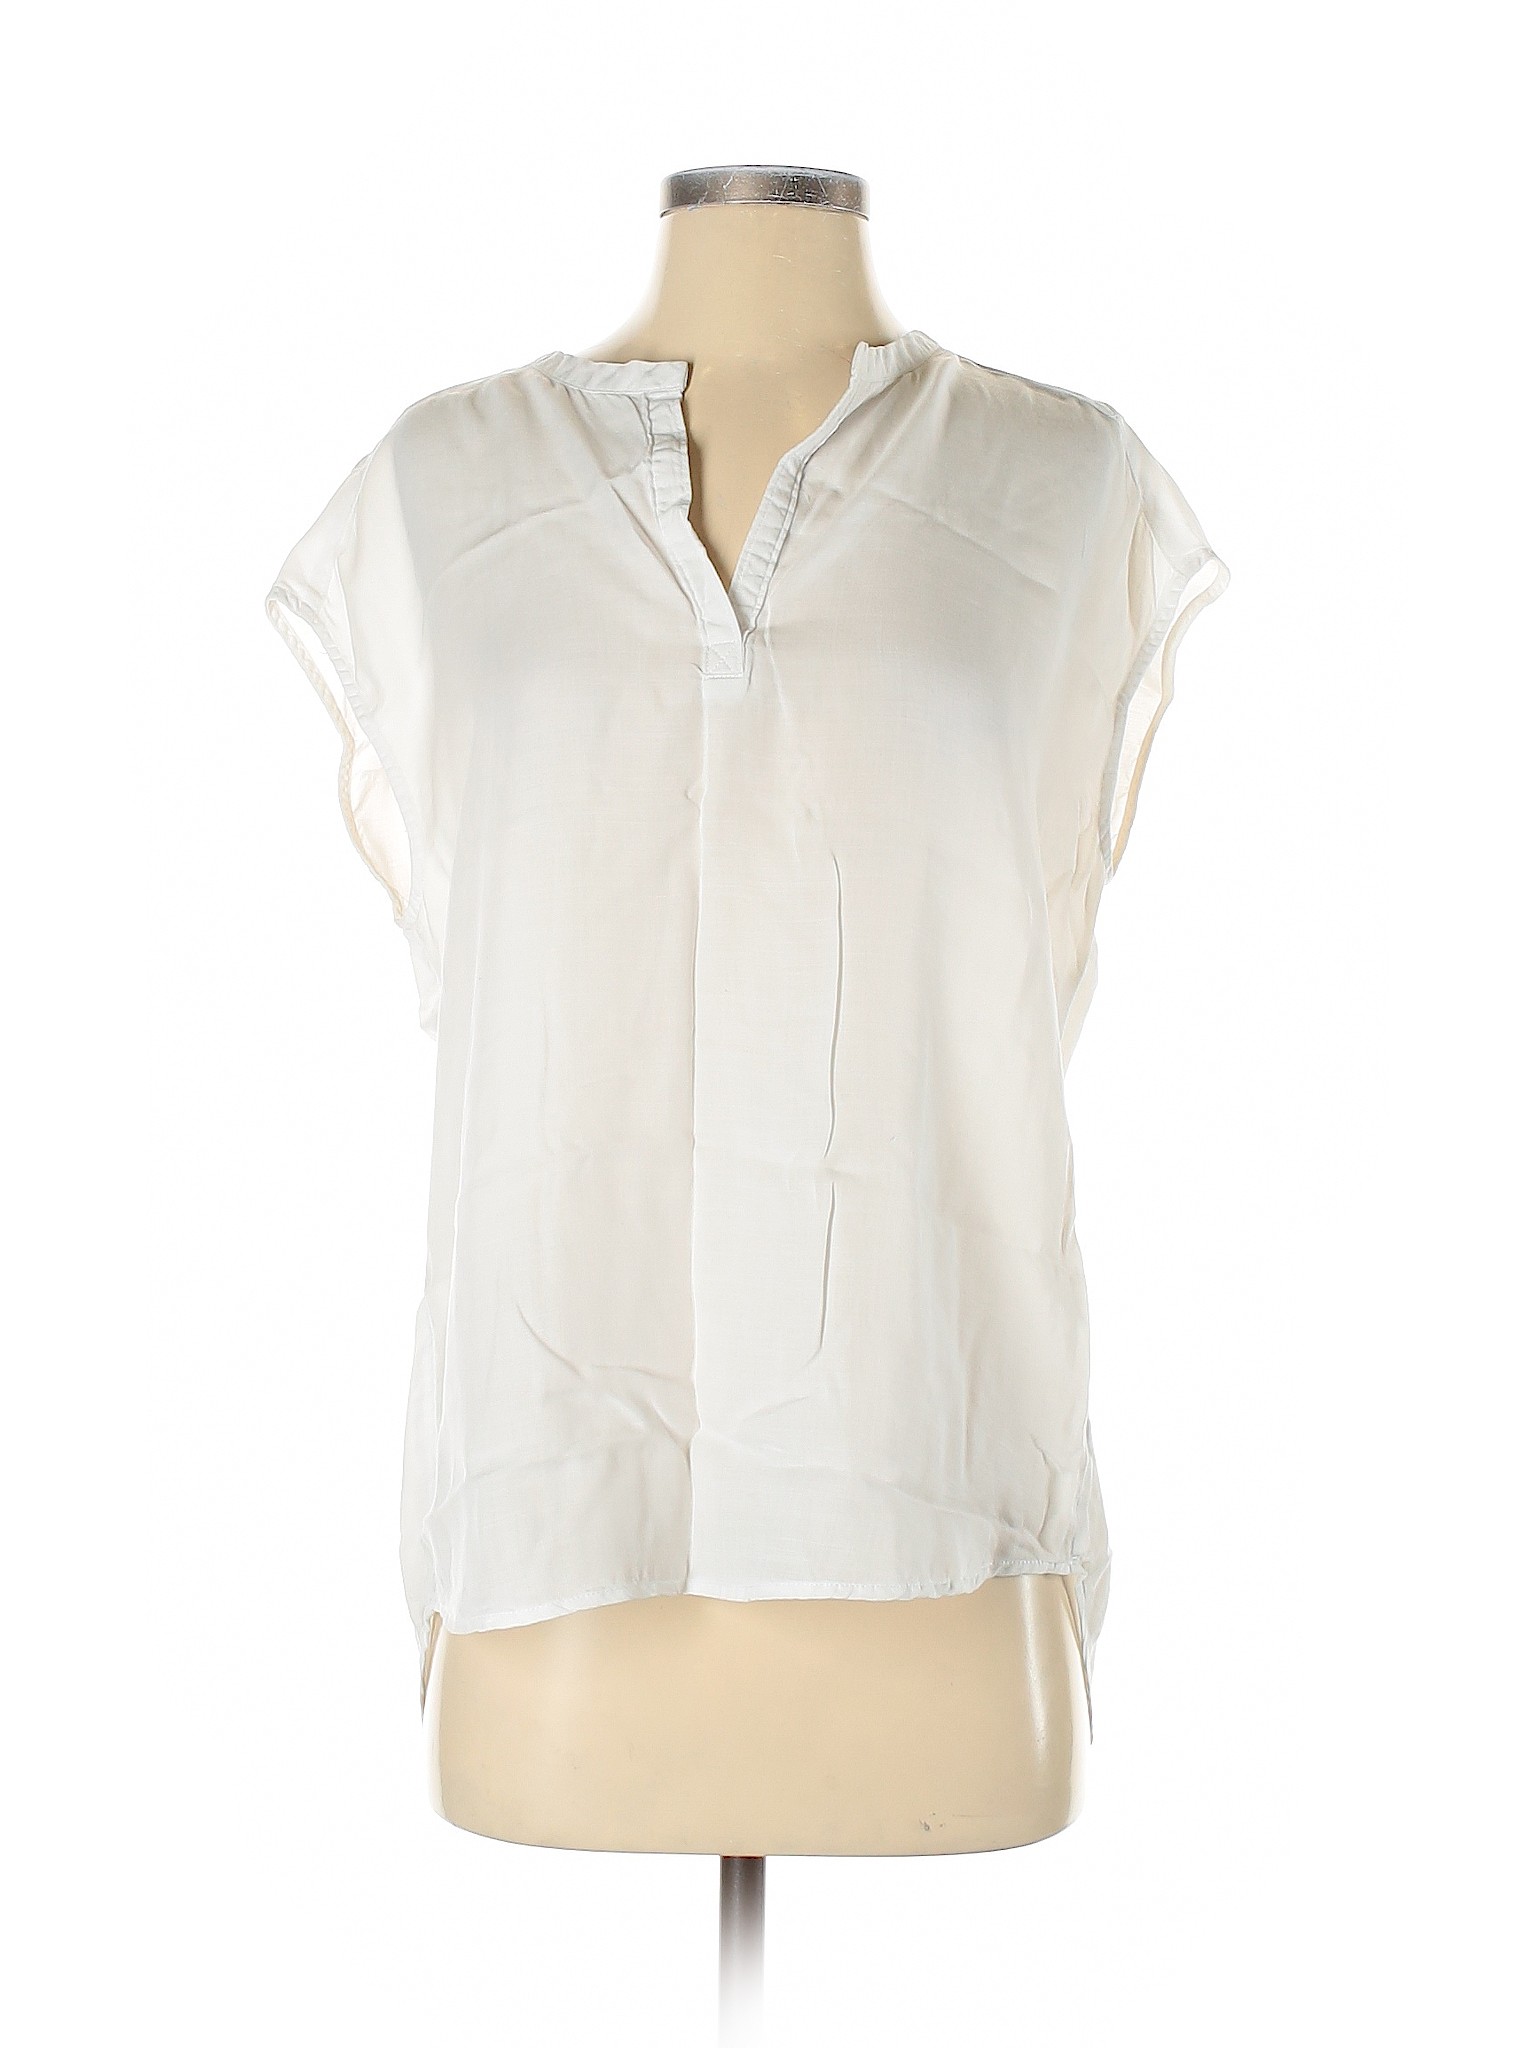 Cloth & Stone Women White Short Sleeve Blouse S | eBay